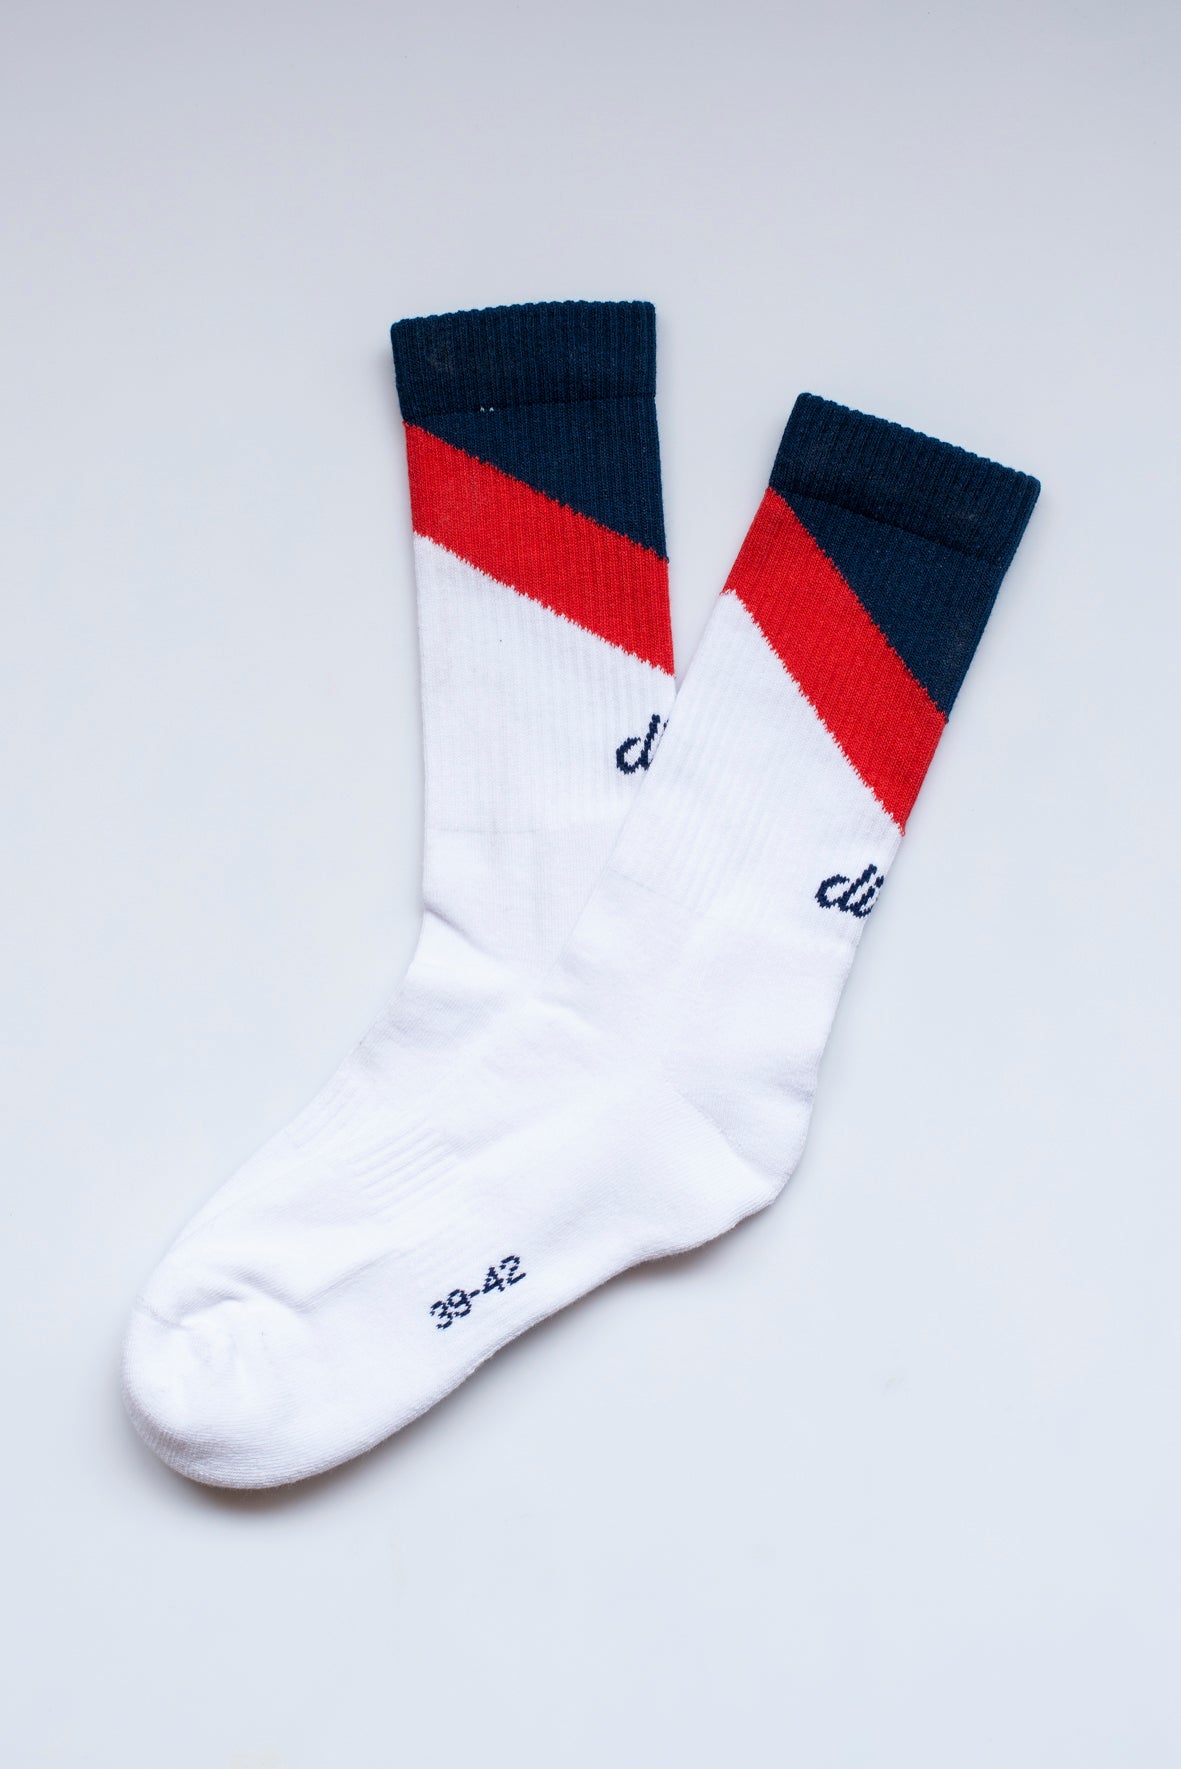 ZIG ZAG Socks, white/red/blue